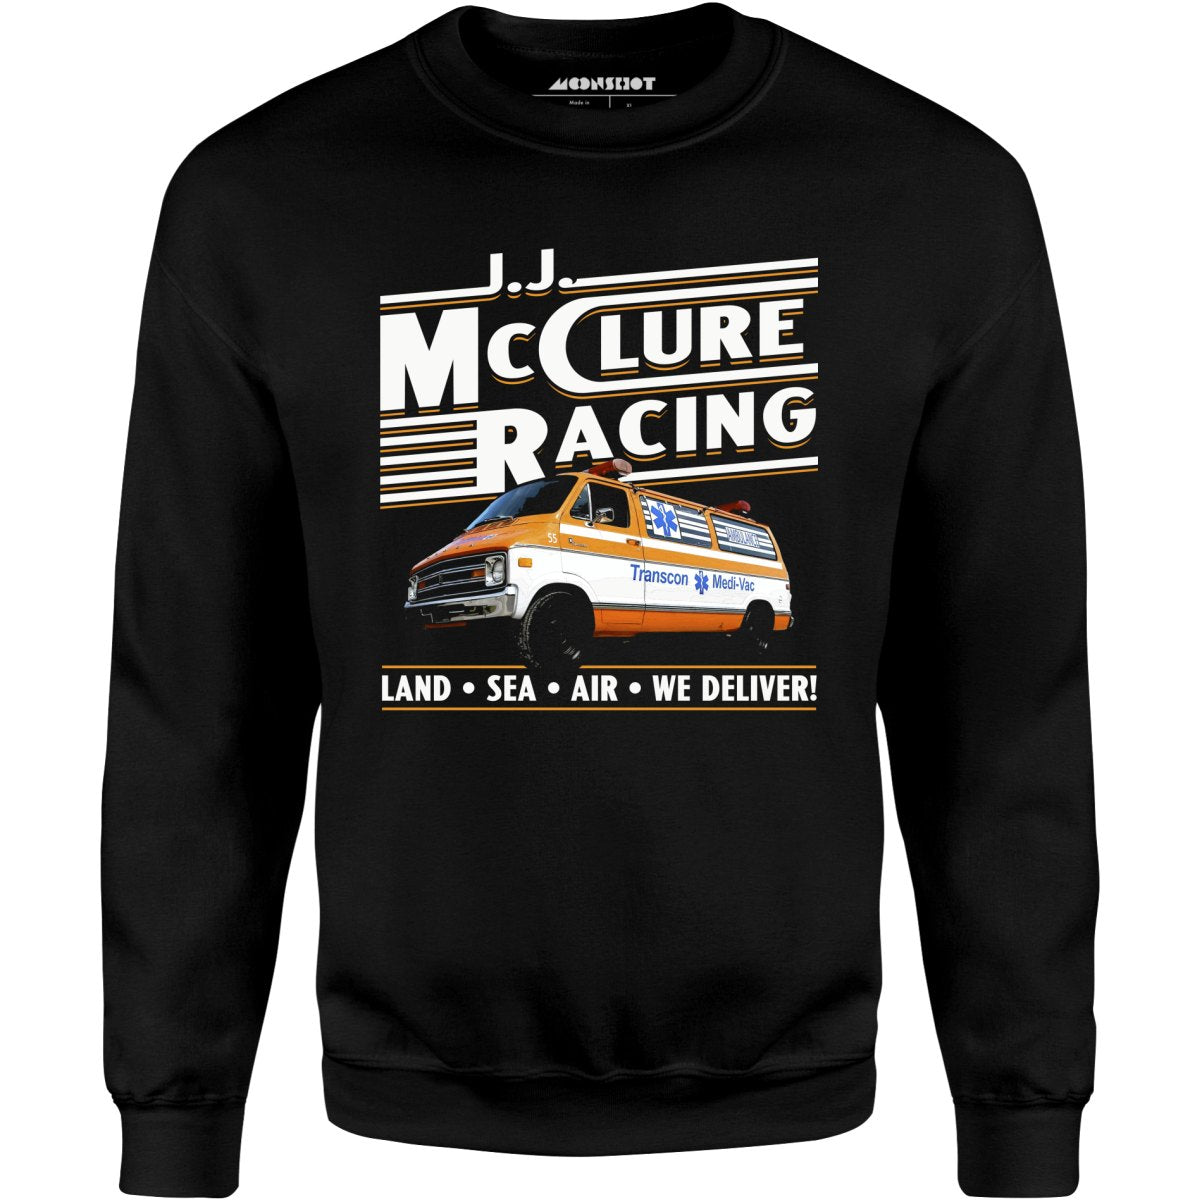 J.J. McClure Racing - Unisex Sweatshirt